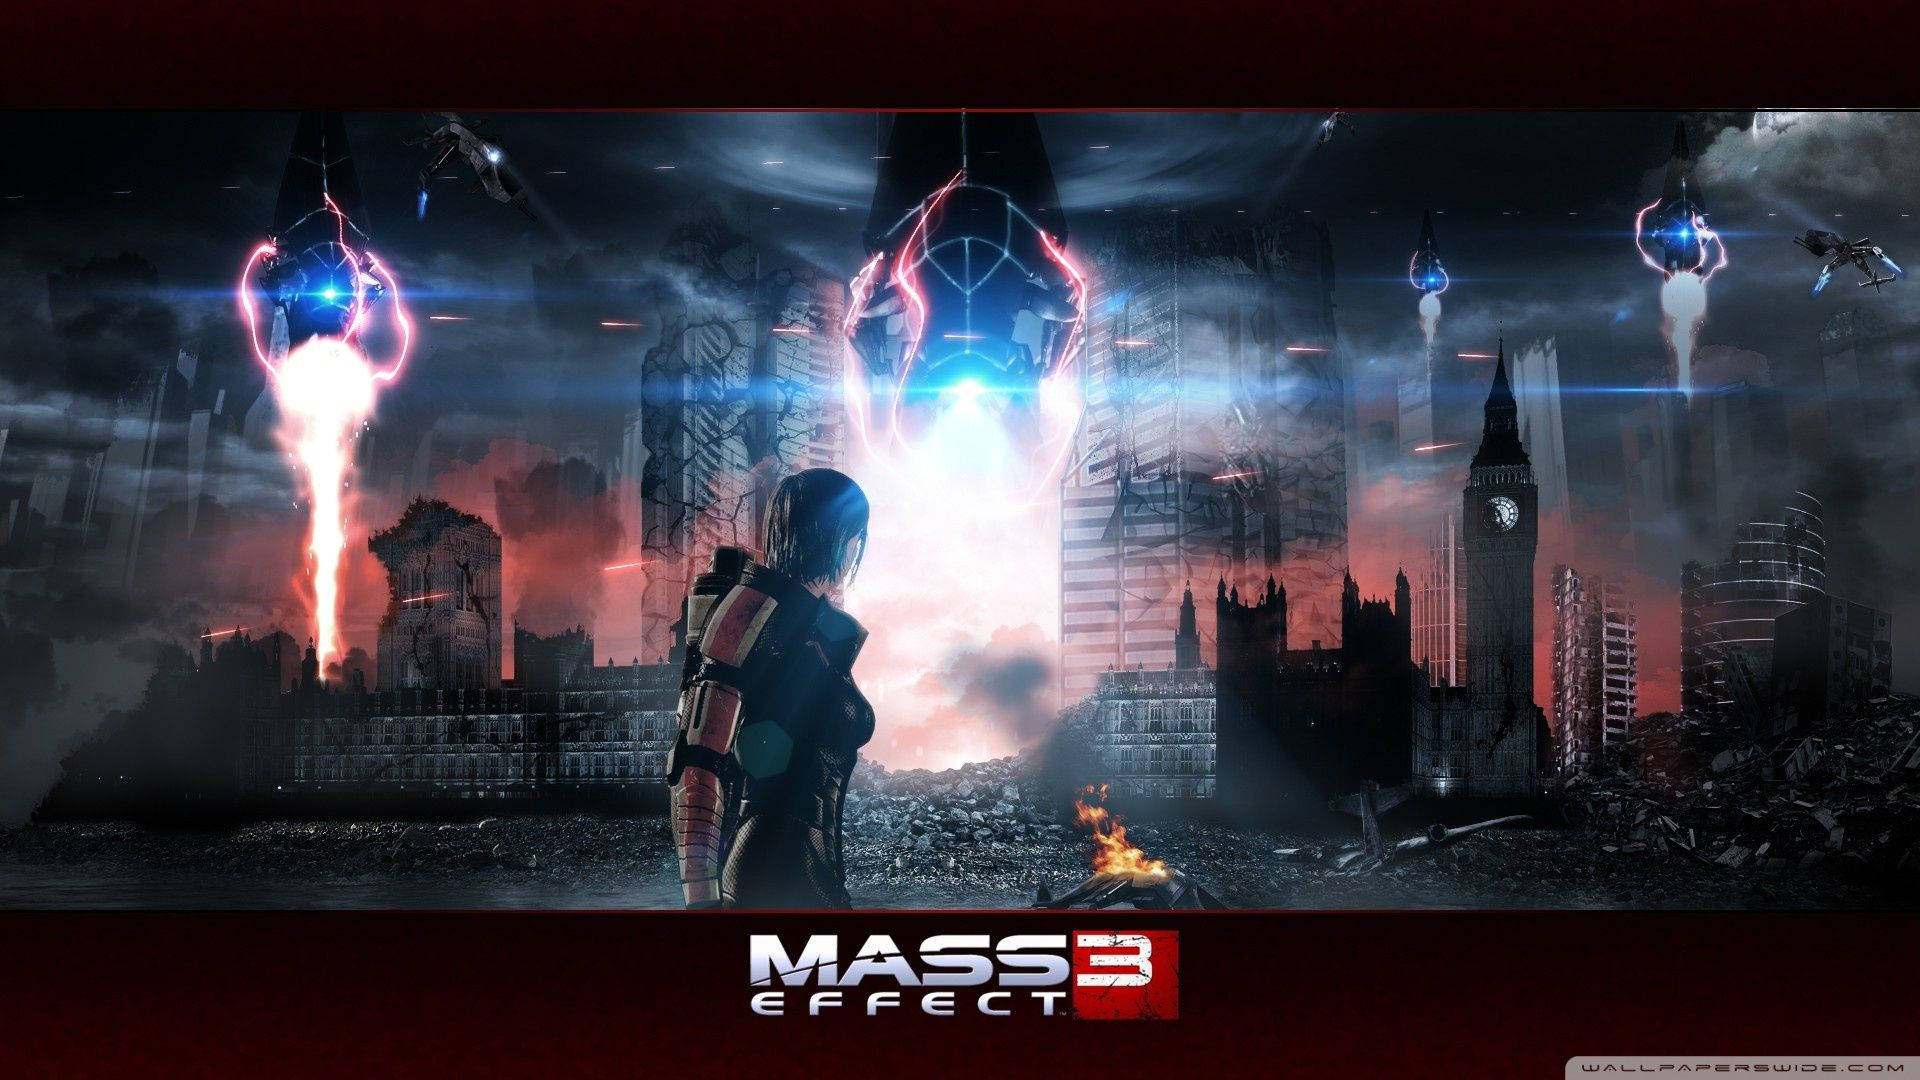 Mass Effect 3 Destroyed Buildings Wallpaper